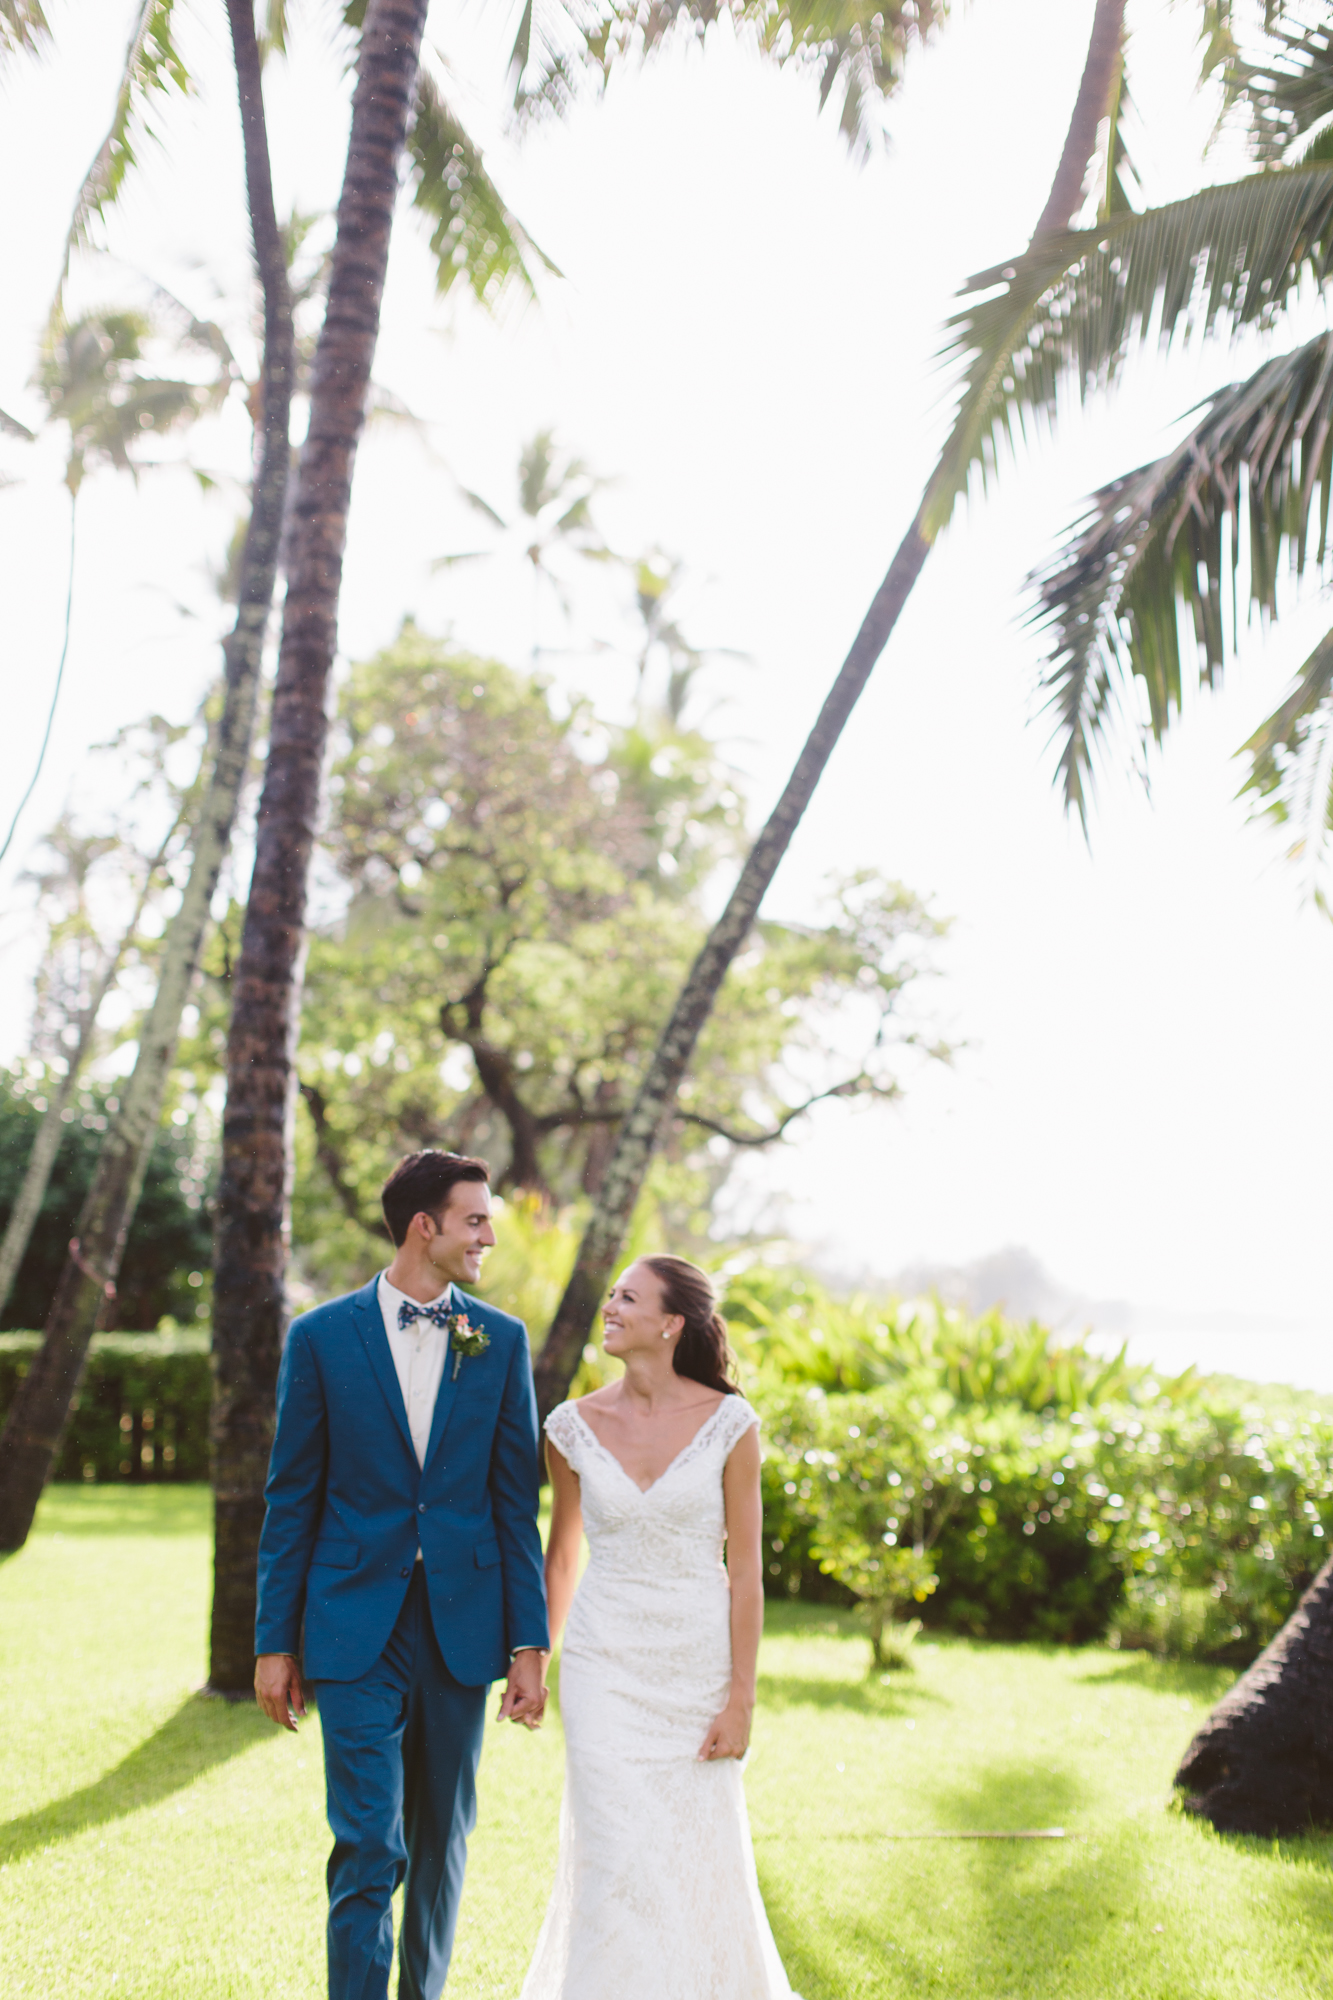 San Diego Wedding Photographer, San Diego Wedding photography, Hawaii Wedding Venue, oahu Wedding Venue, Hawaii Polo Club, Oahu Polo Club, Oahu Wedding, Hawaii Wedding, outdoor wedding, Beach wedding